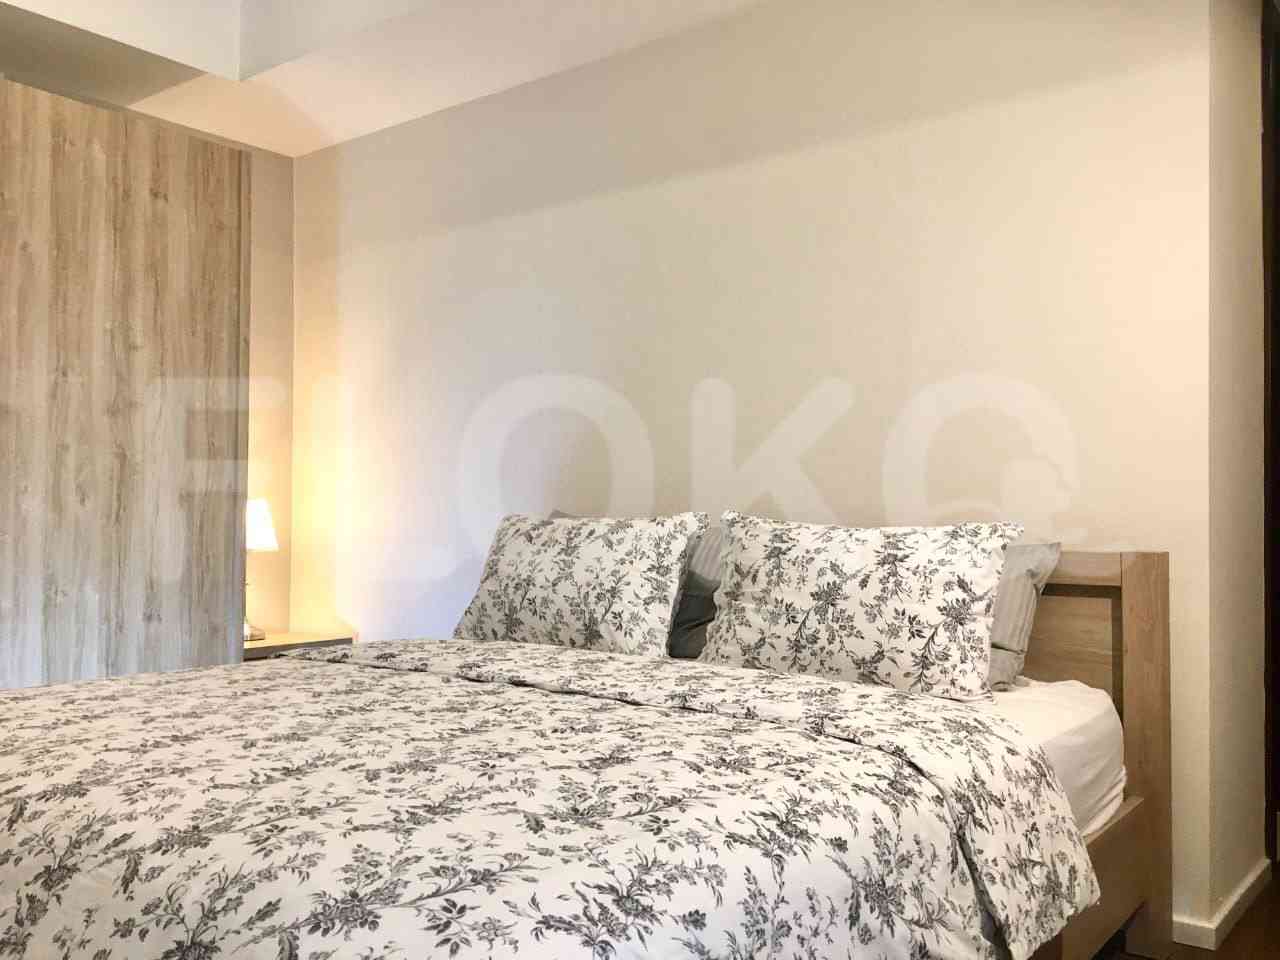 3 Bedroom on 20th Floor for Rent in Kemang Village Residence - fke21a 3